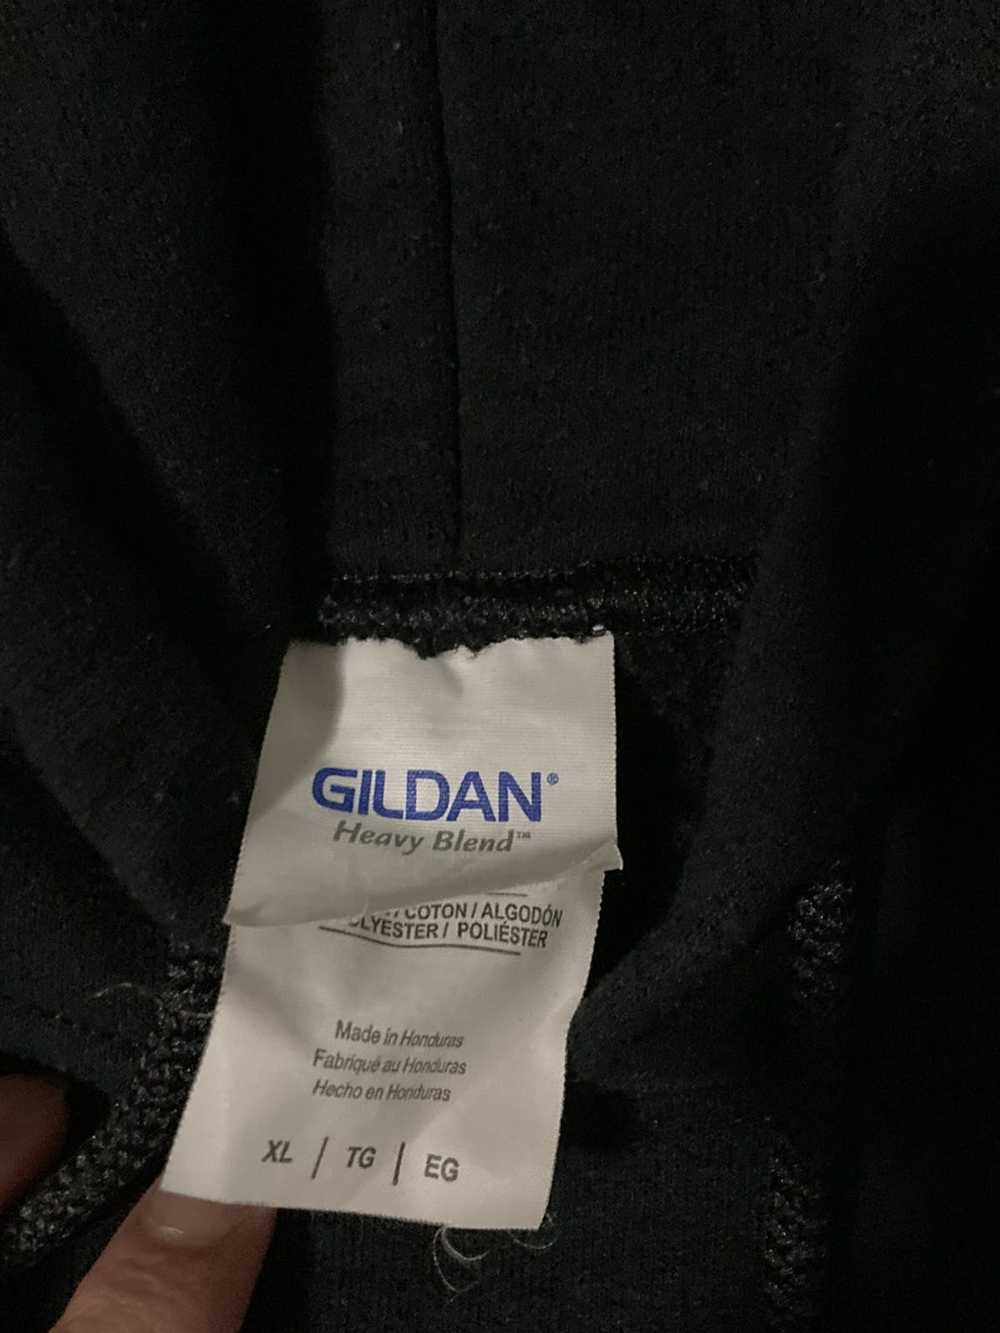 Gildan Extra Large Black Vintage Gildan Hoodie - image 2